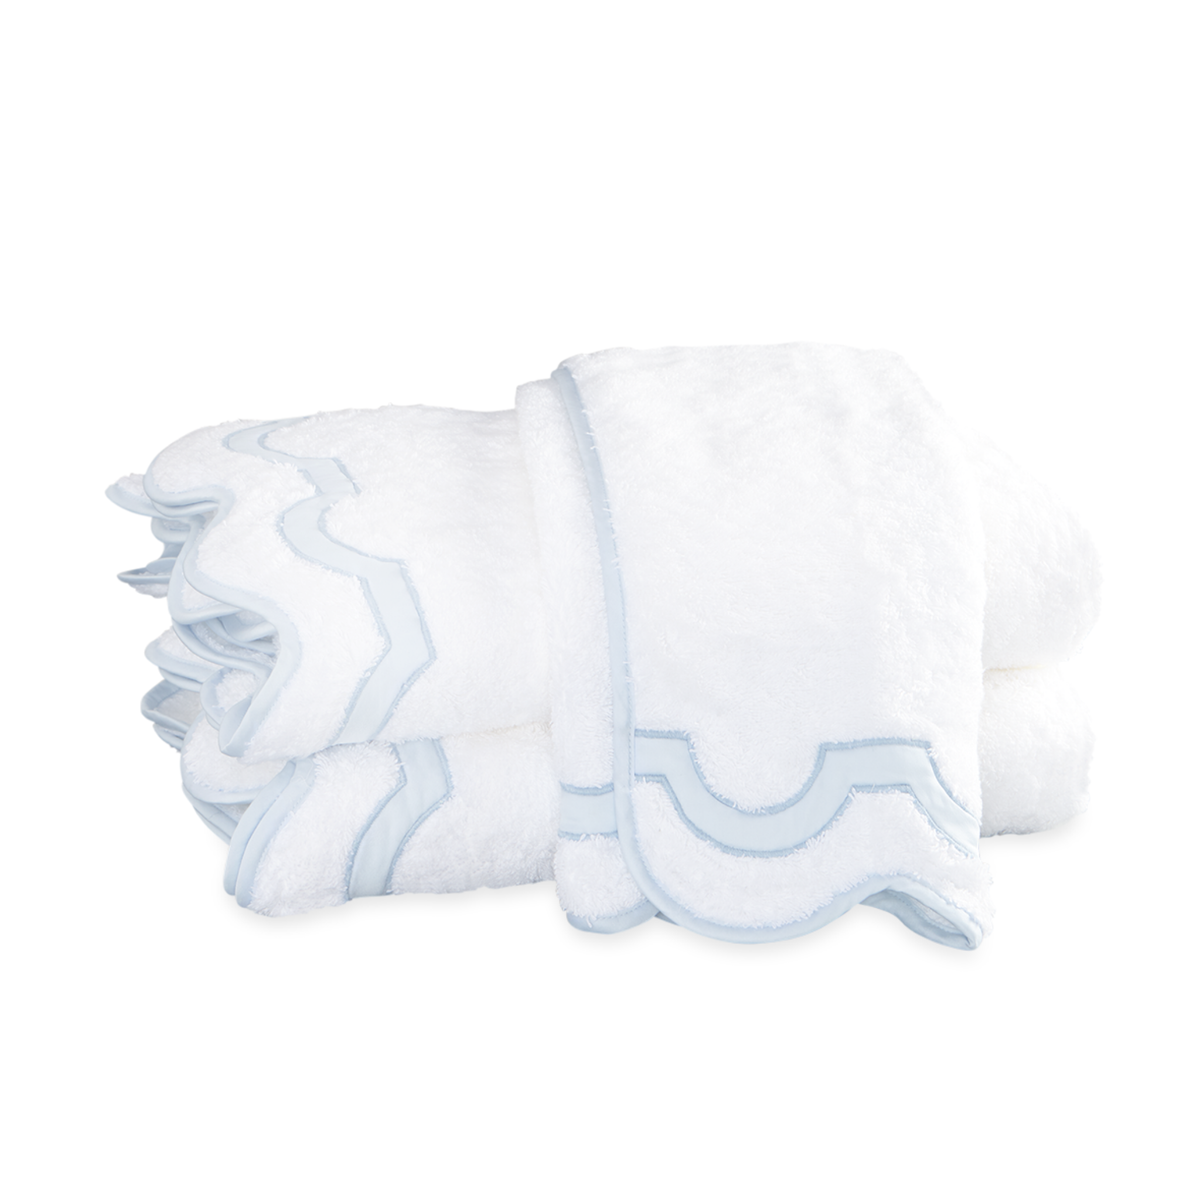 Folded Matouk Mirasol Bath Towels in Blue Color